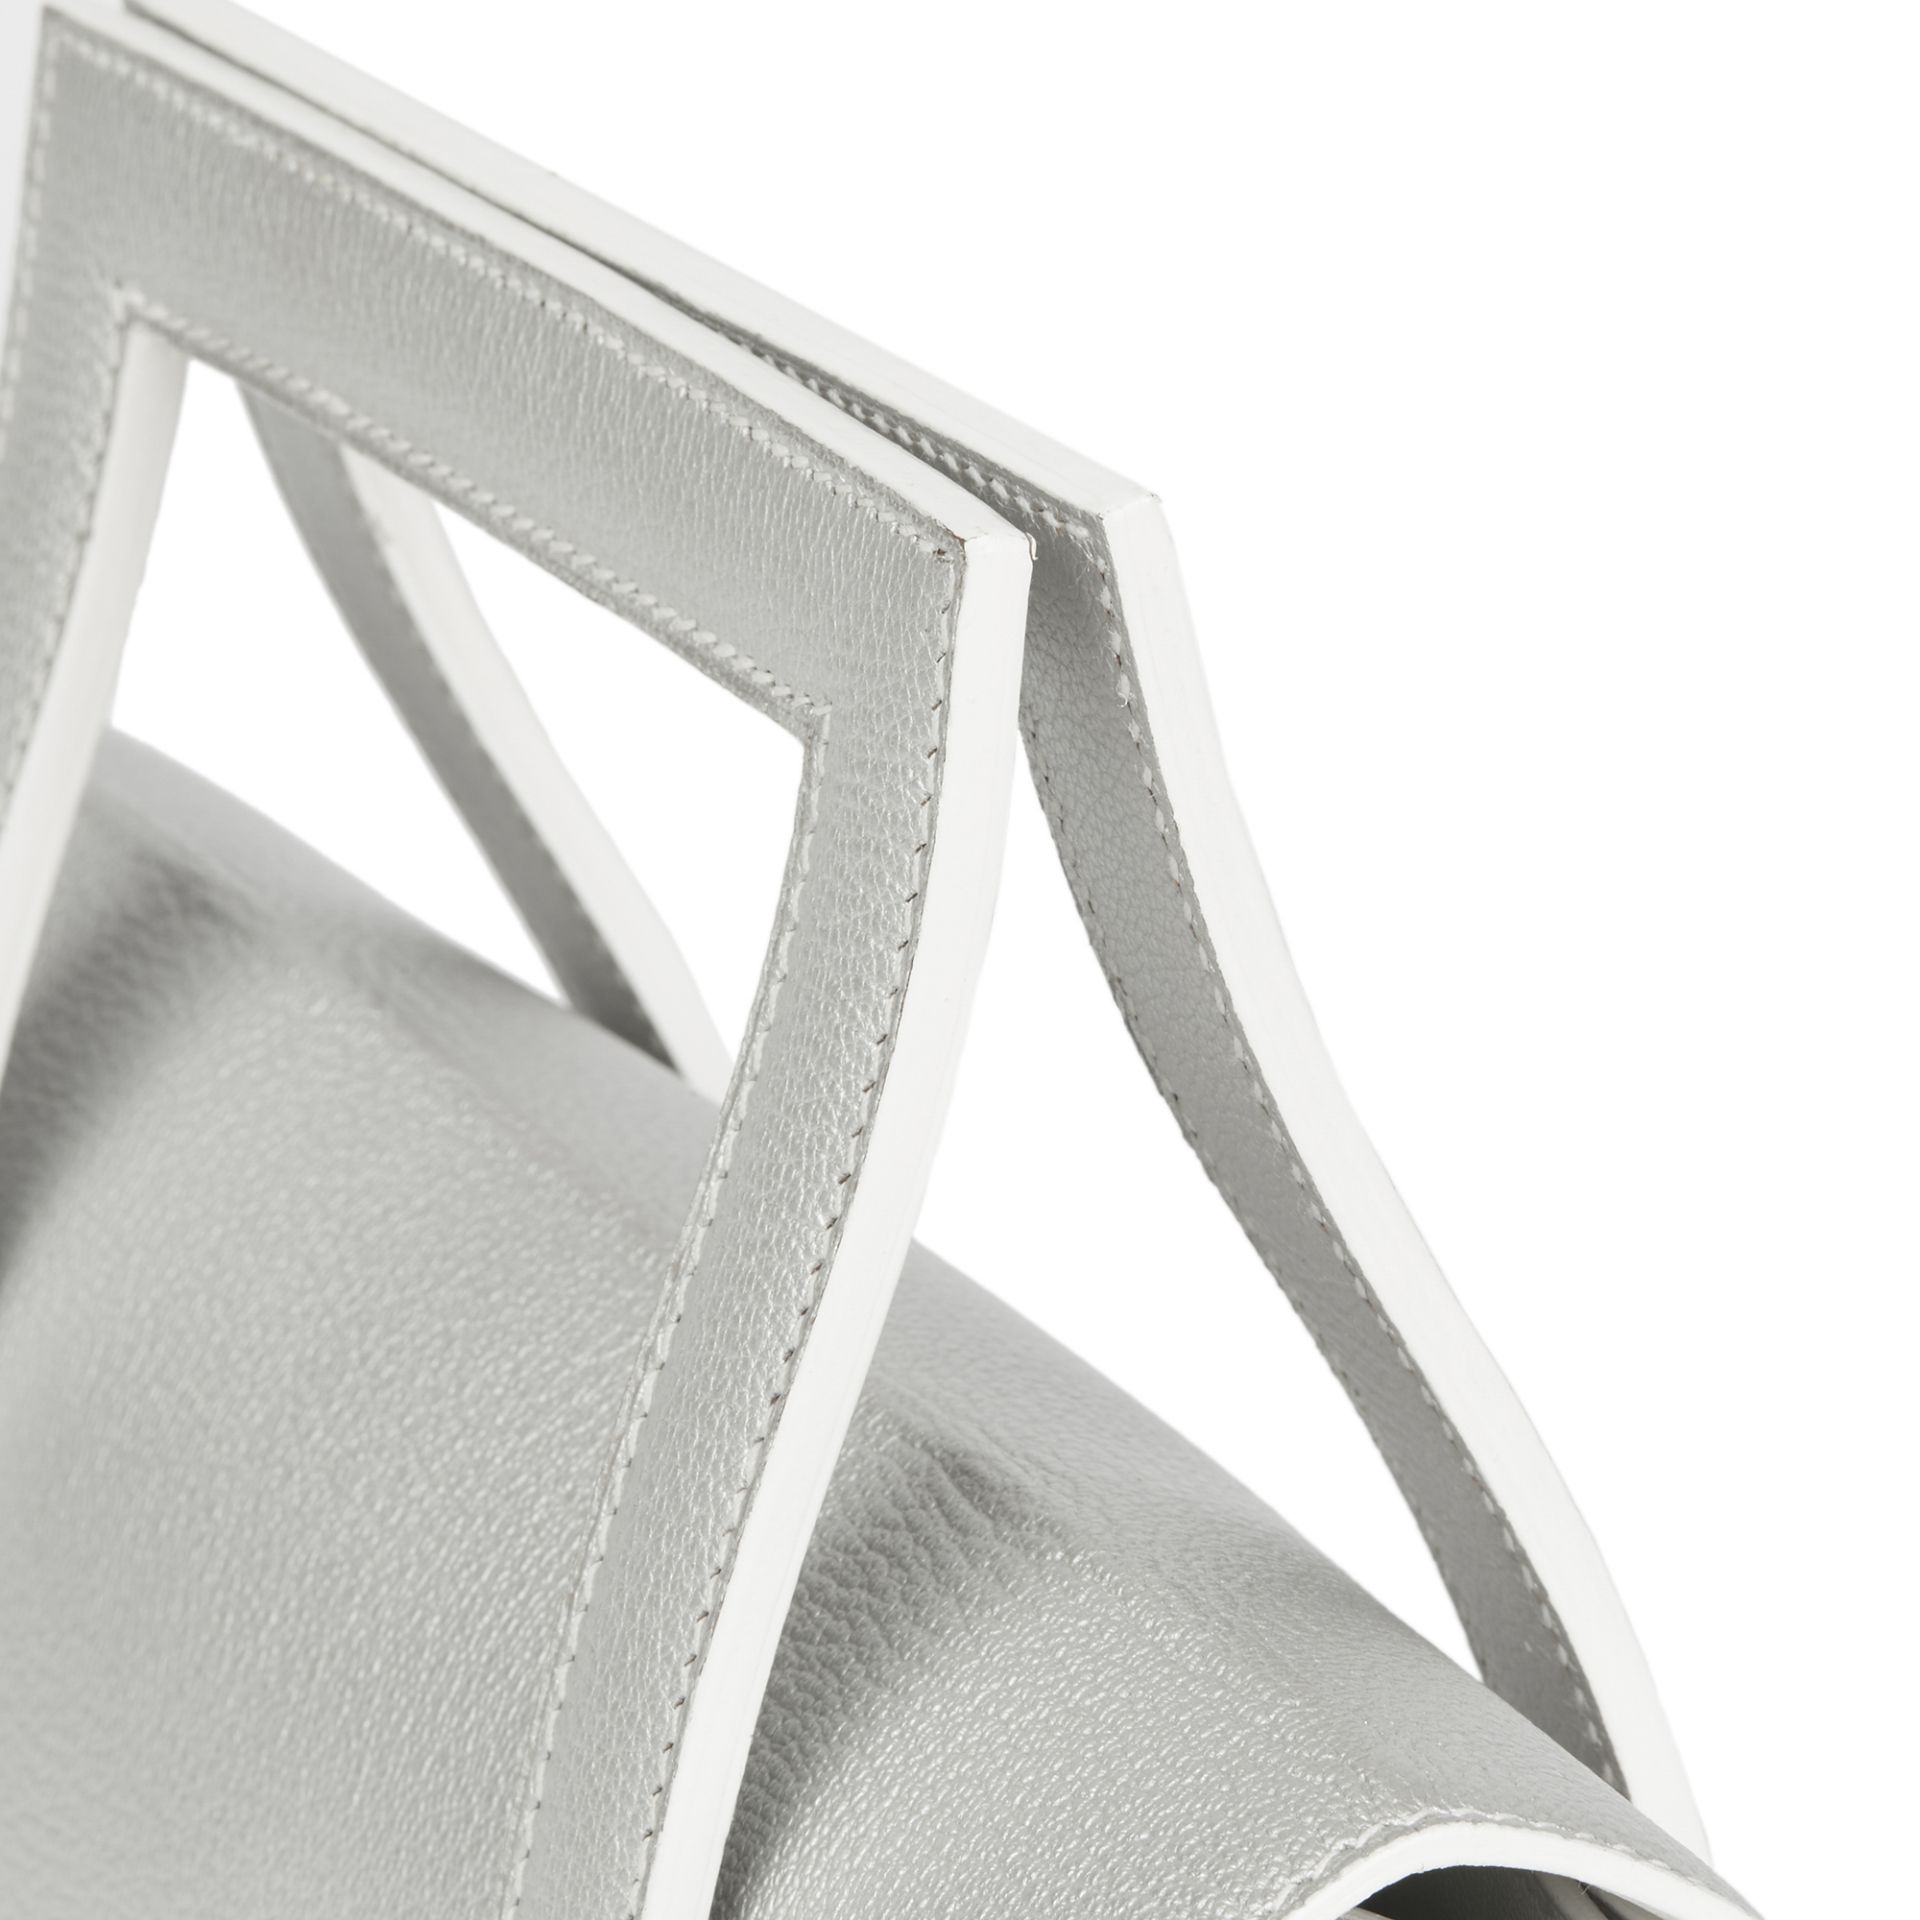 Hermès Silver Metallic Chevre Leather 365 Pm - Image 7 of 12